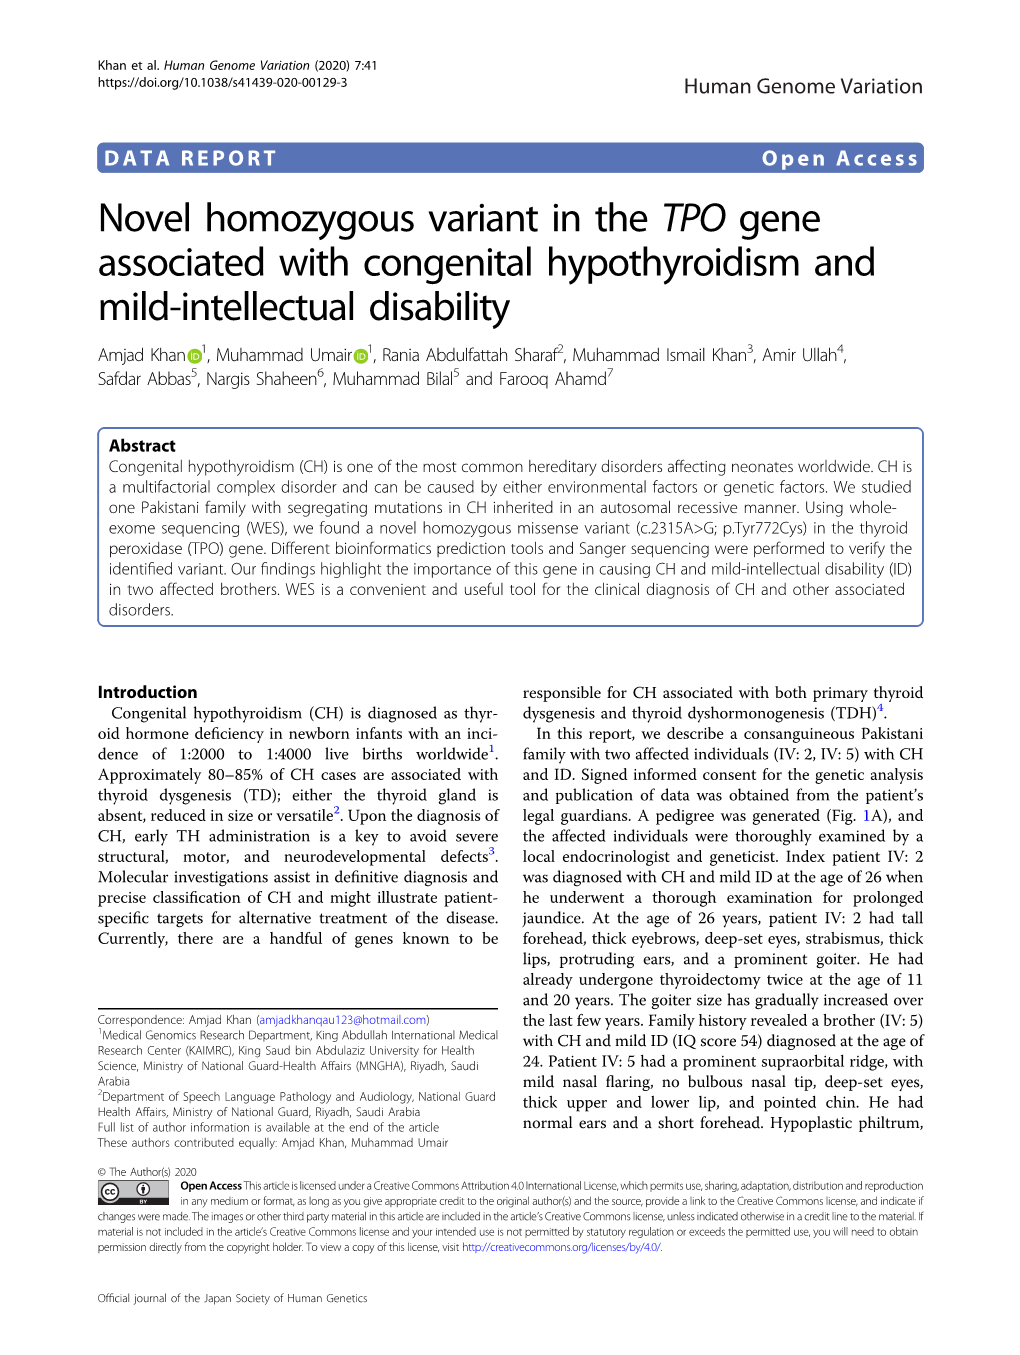 Novel Homozygous Variant in the TPO Gene Associated with Congenital